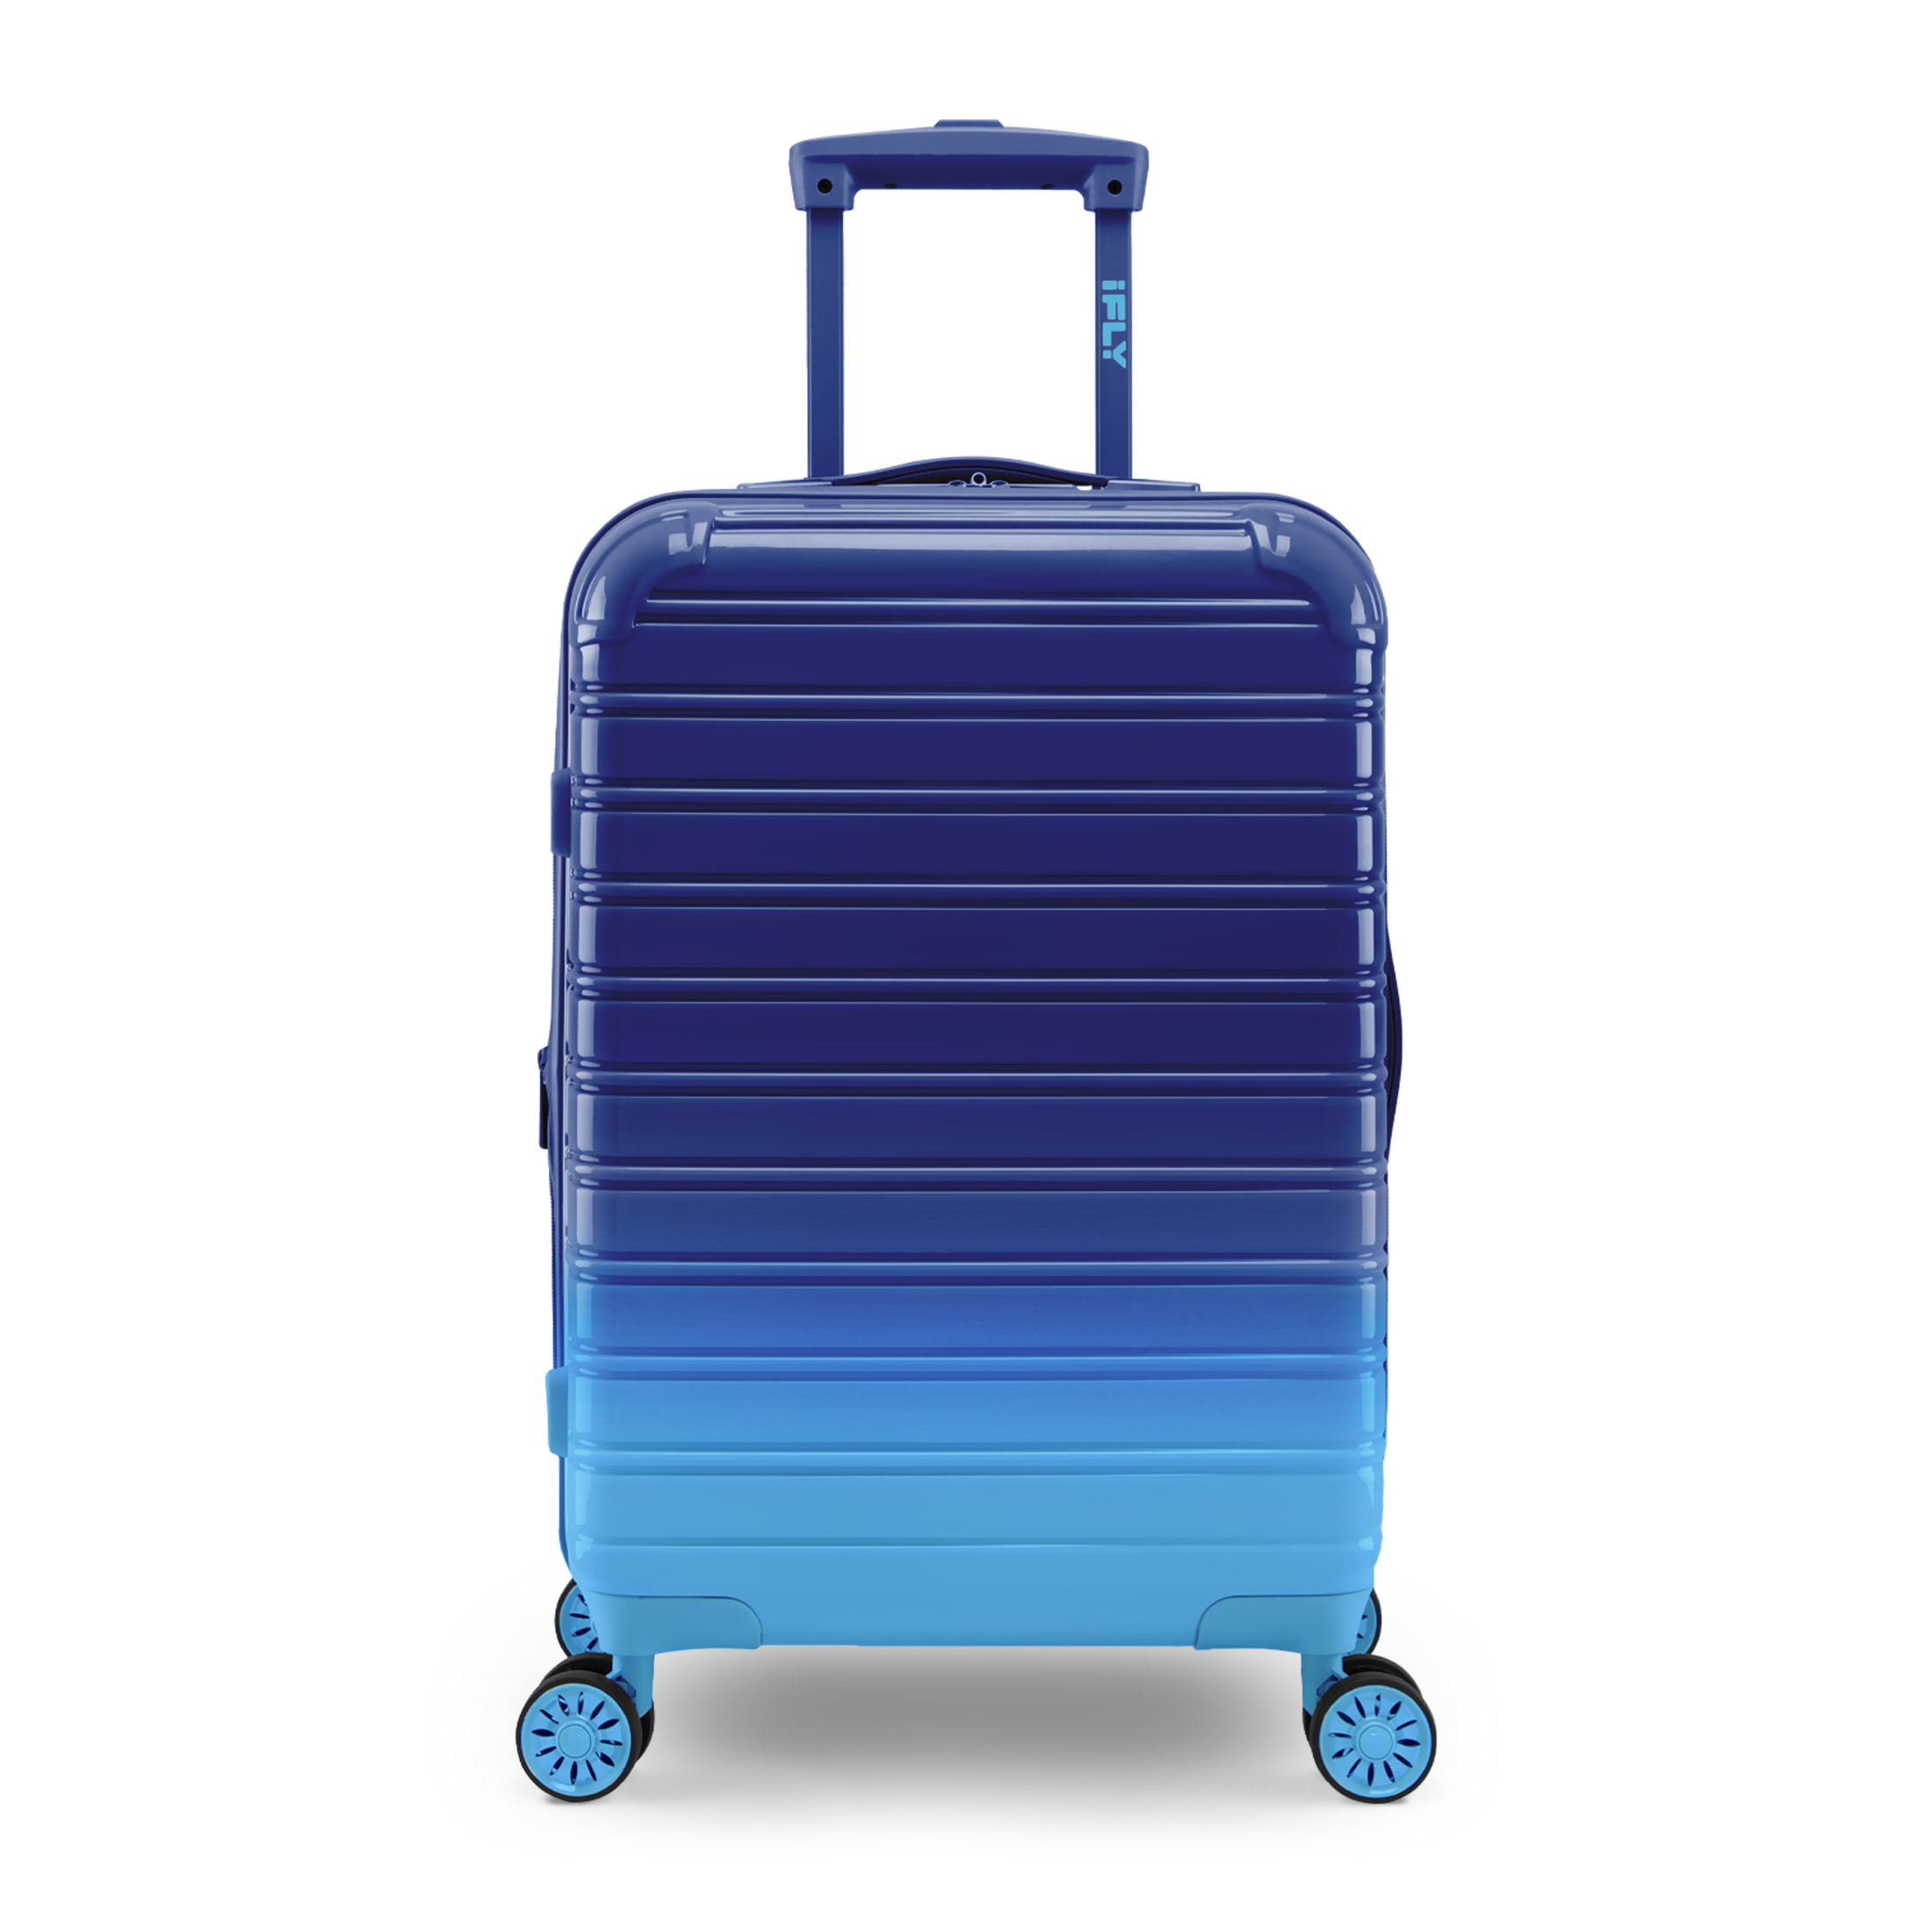 iFLY Hardside Fibertech Carry On Luggage 20", Sunny Sky - image 1 of 8